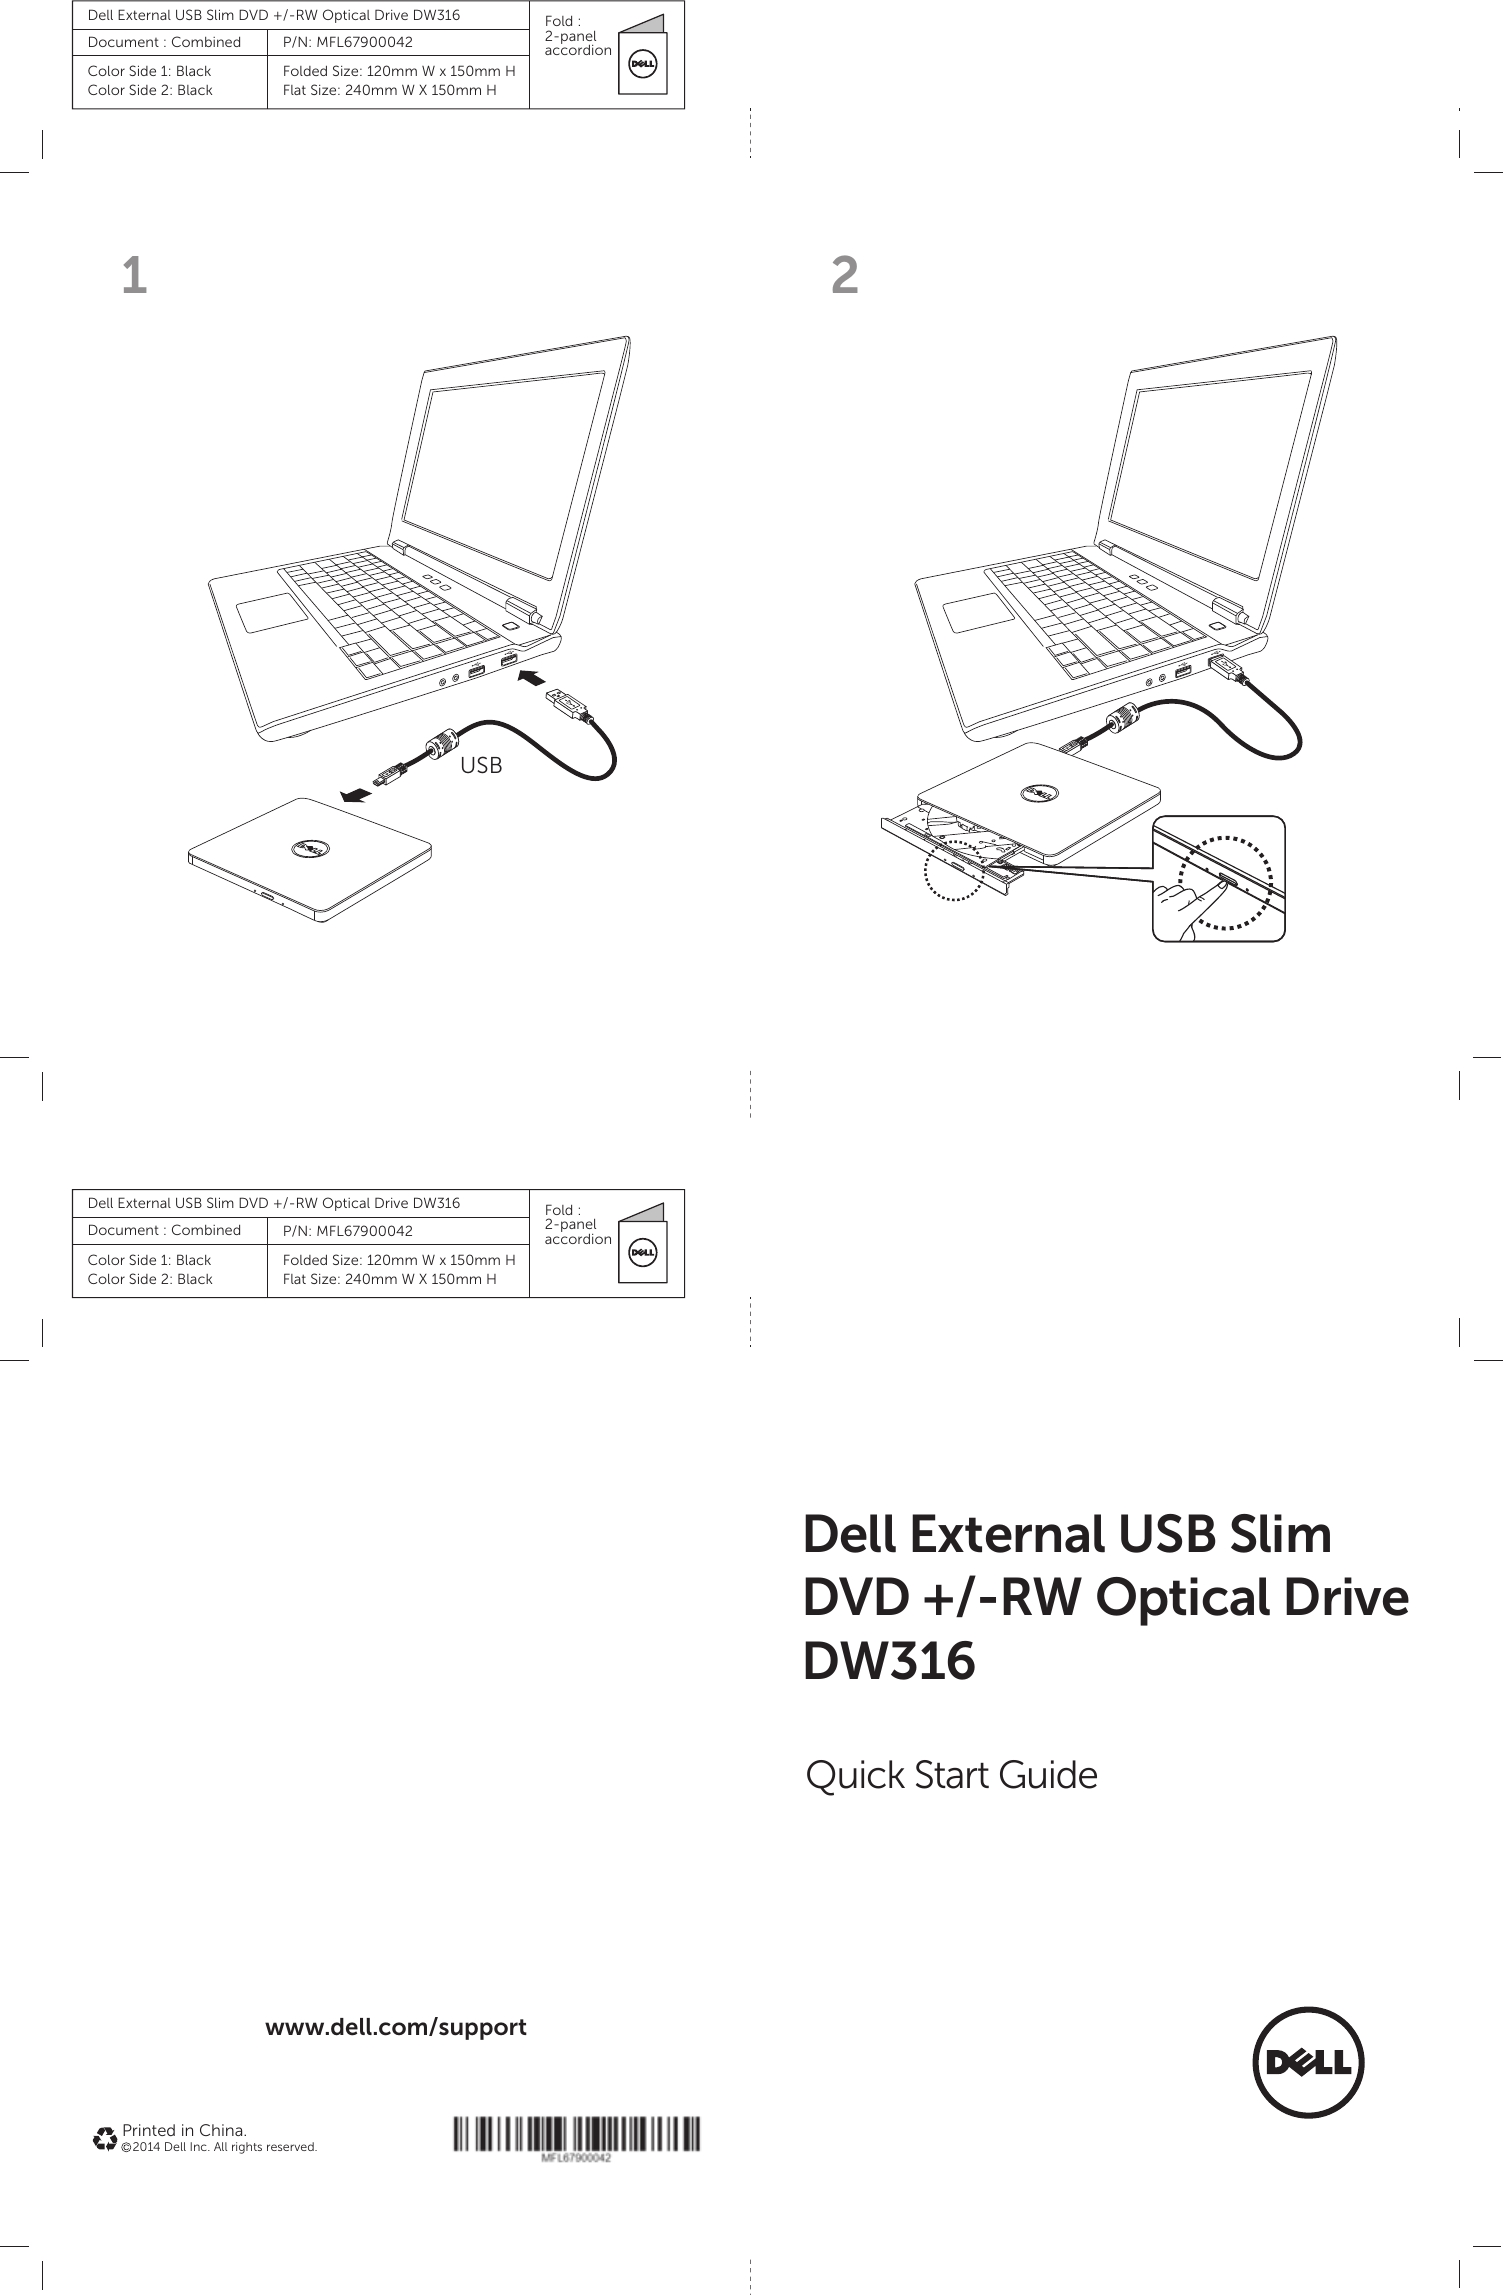 Page 2 of 2 - Dell External USB Slim DVD +/- RW Optical Drive DW 316 Quick Start Guide  1507995221dell-external-usb-slim-dvd-optical-drive-dw316 Setup En-us